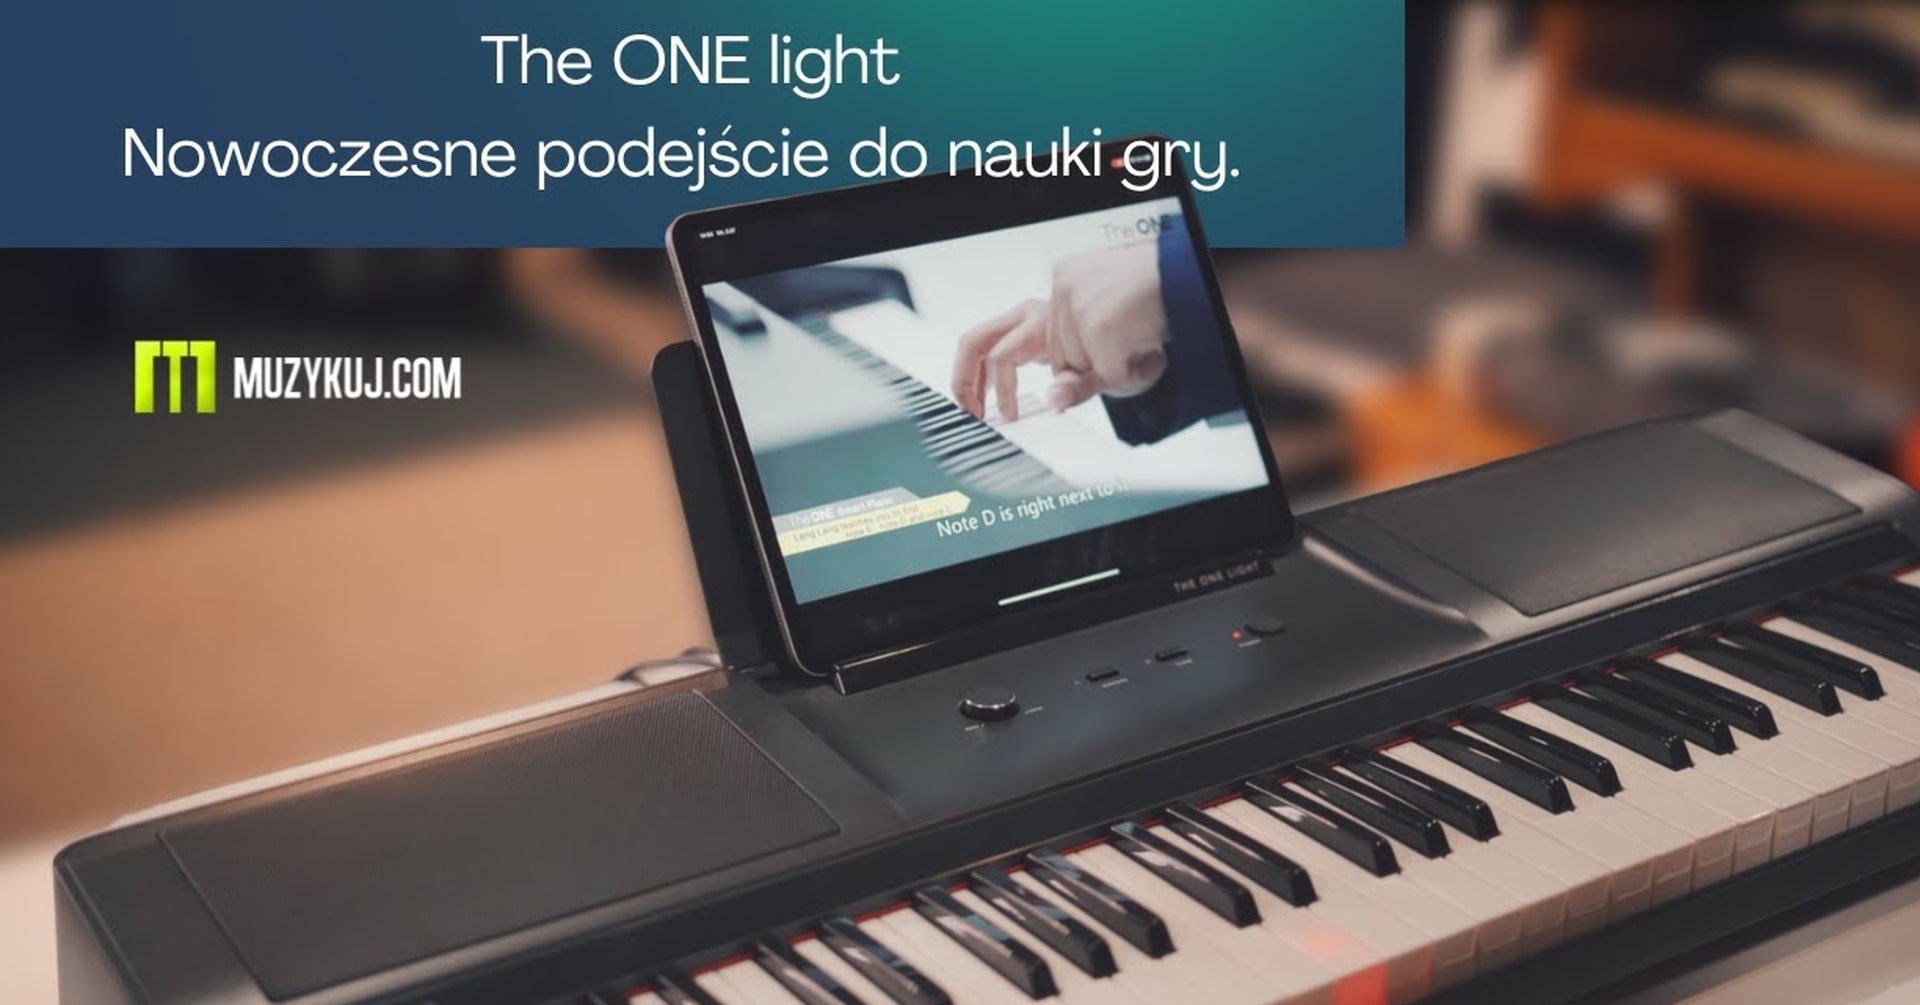 TEST Muzykuj.com: The ONE Light keyboard